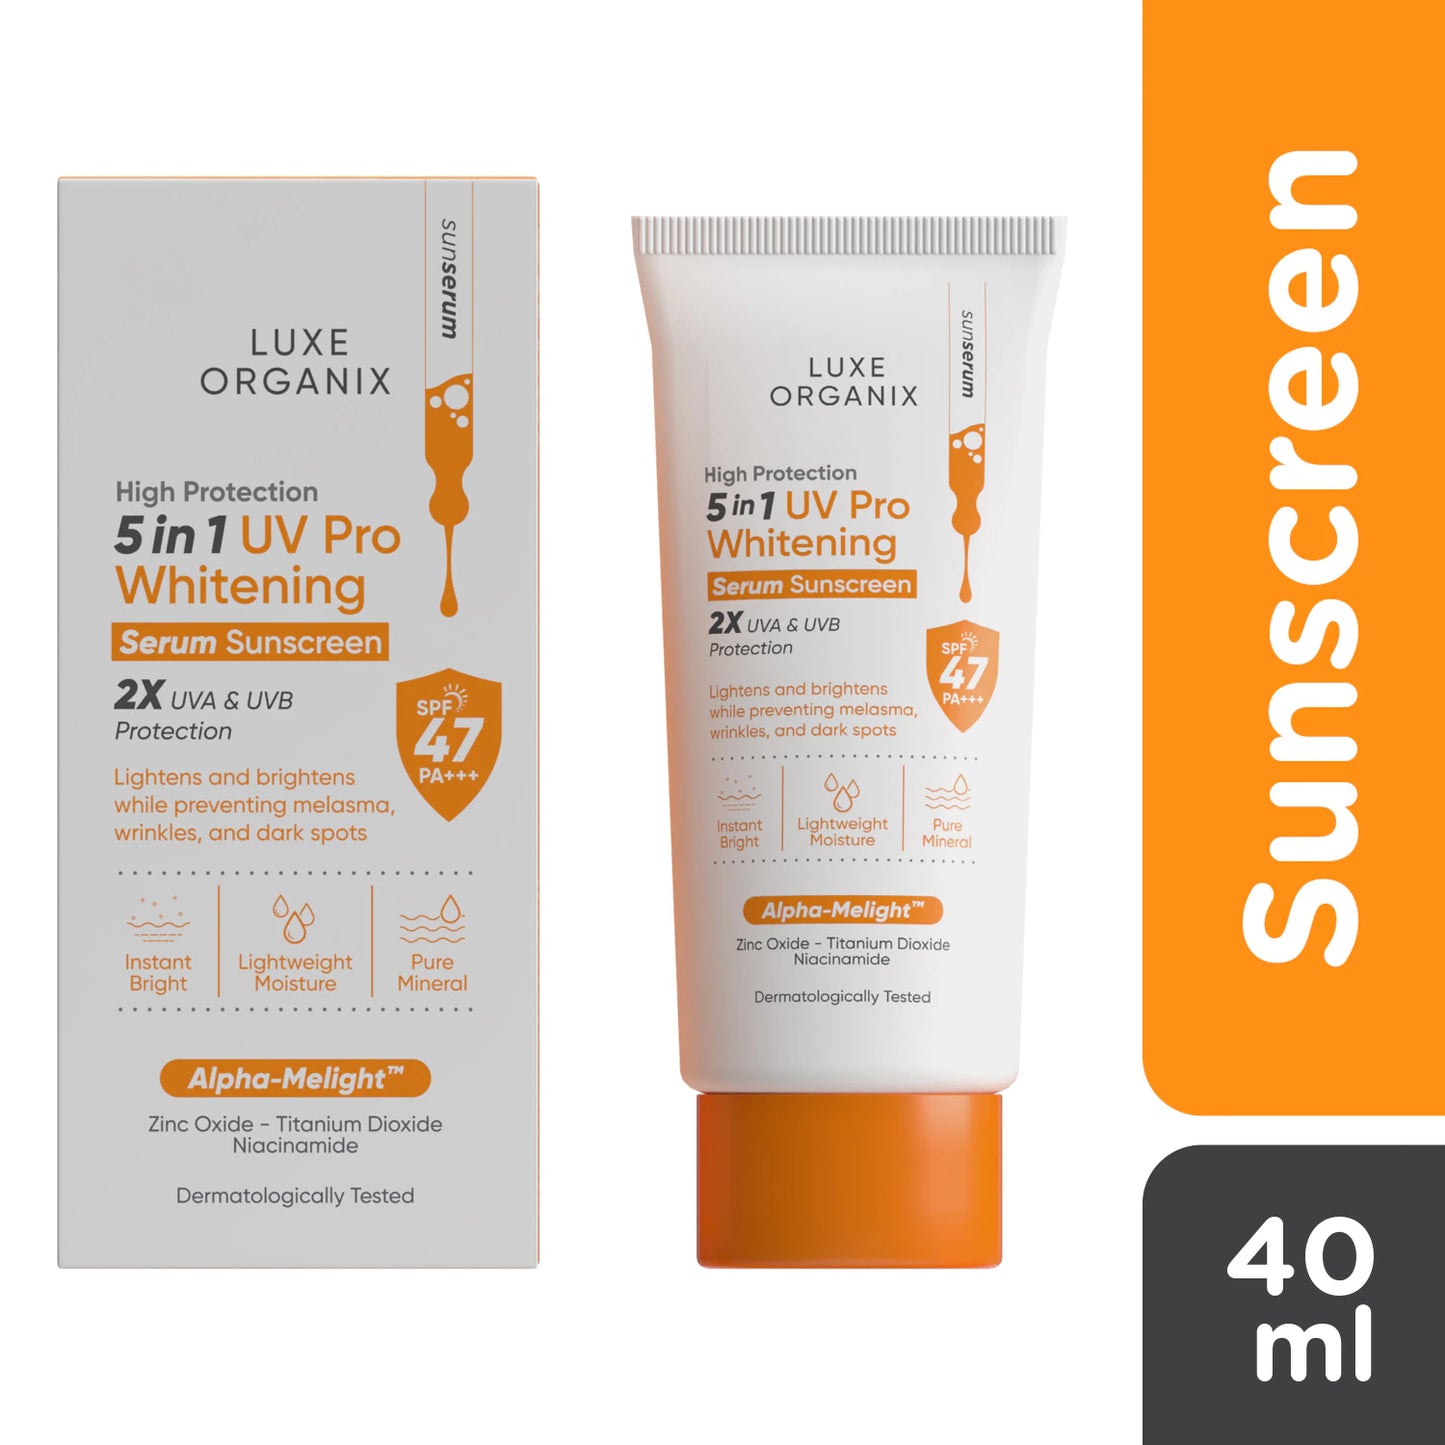 High Protection 5 in 1 UV Pro Whitening Serum Sunscreen